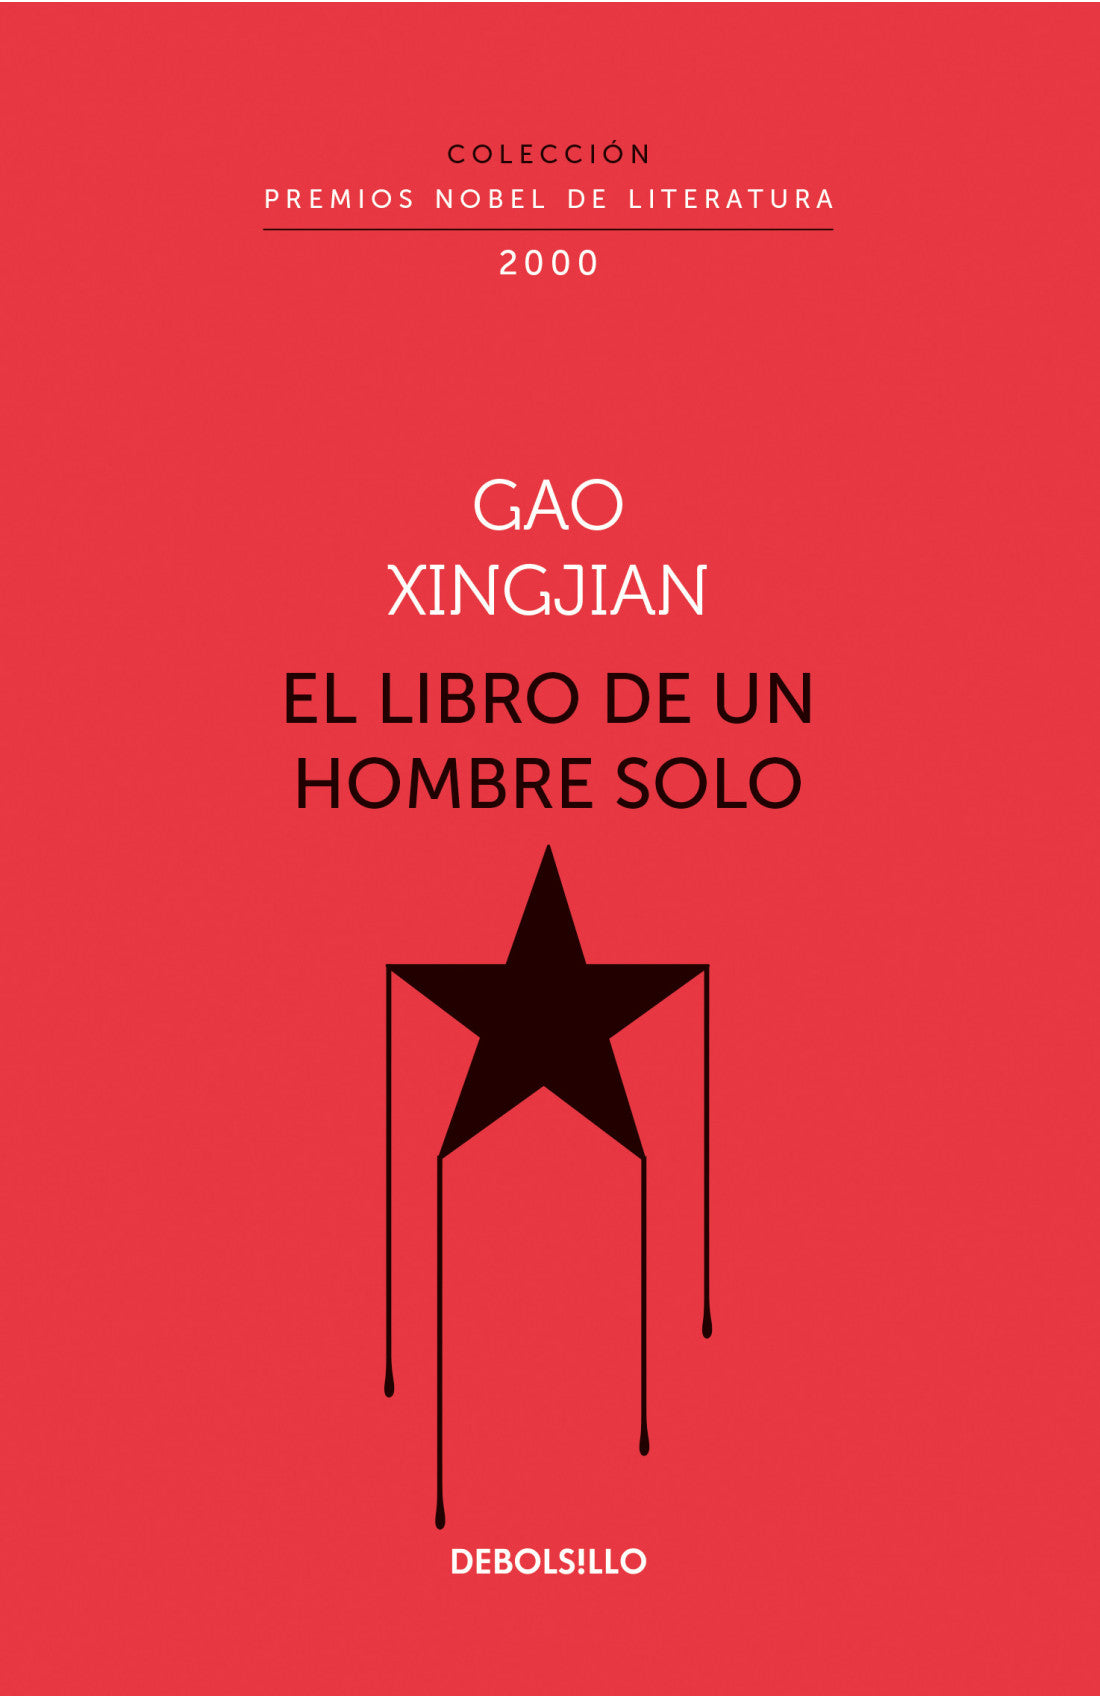 Libro GAO XINGJIAN - El libro de un hombre solo